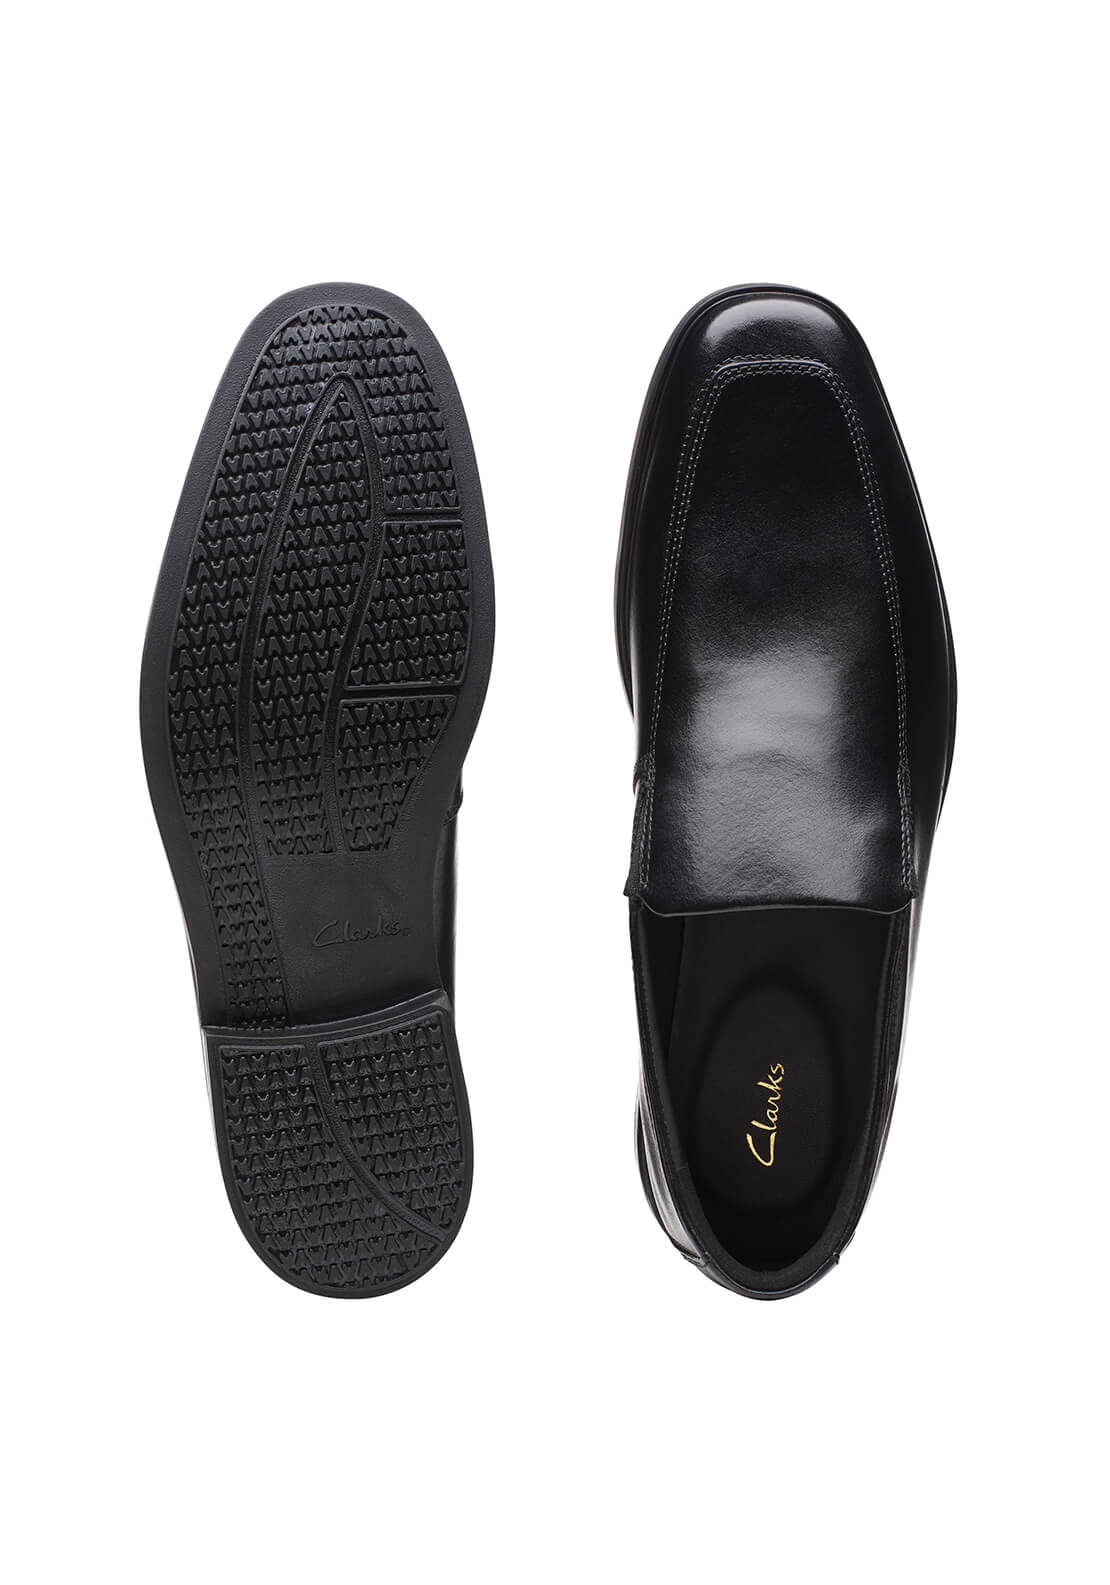 Clarks Howard Edge Formal Shoe - Black 7 Shaws Department Stores